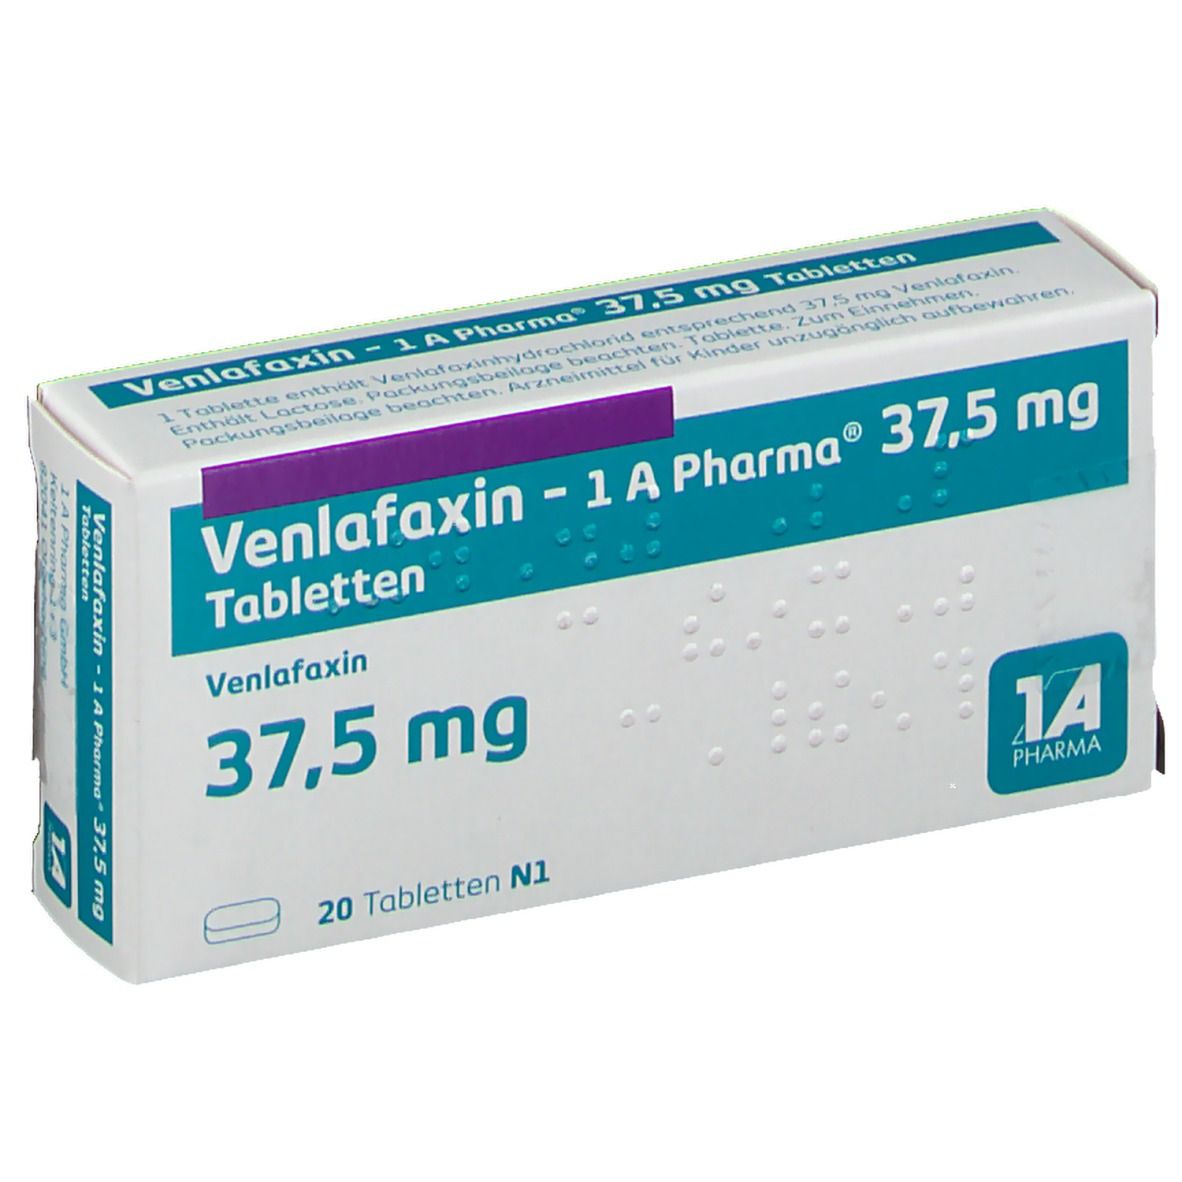 Venlafaxin - 1 A Pharma® 37,5 mg